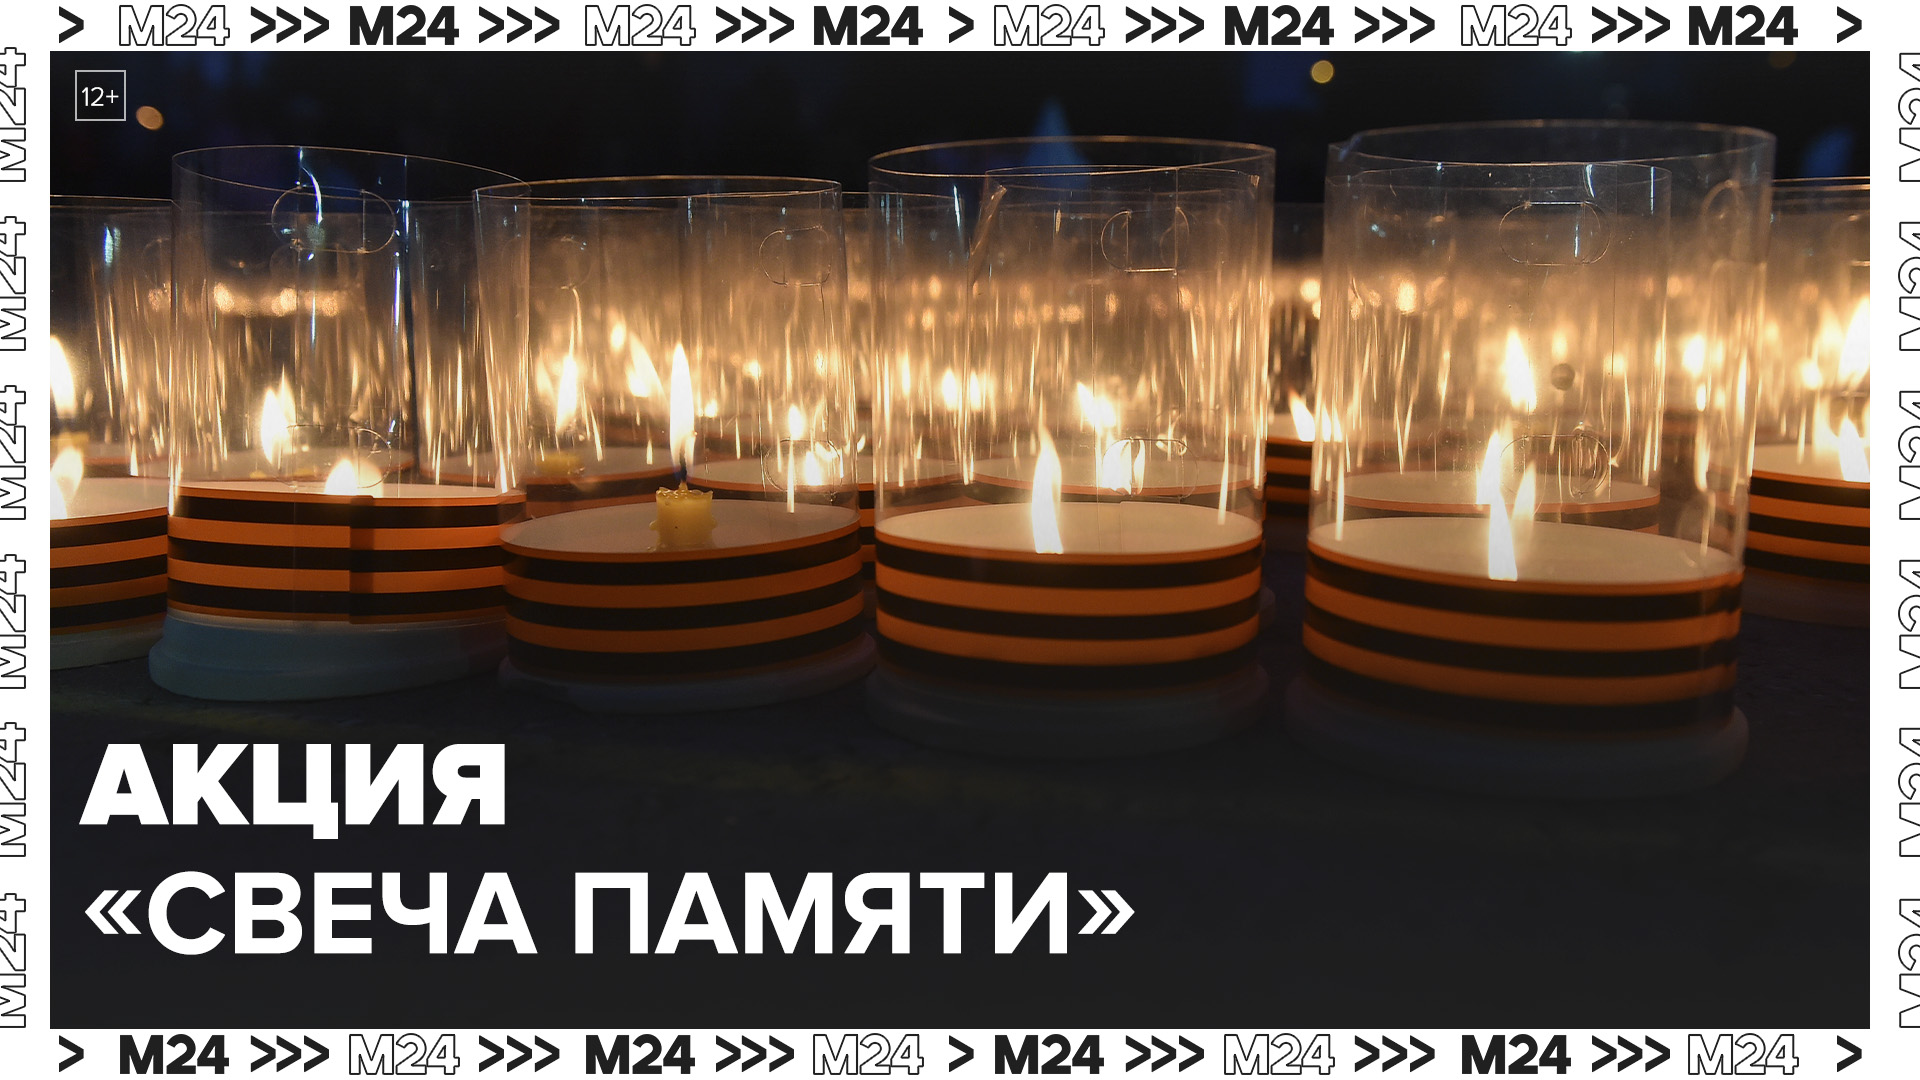 На площади перед Музеем Победы стартовала акция "Свеча памяти" - Москва 24